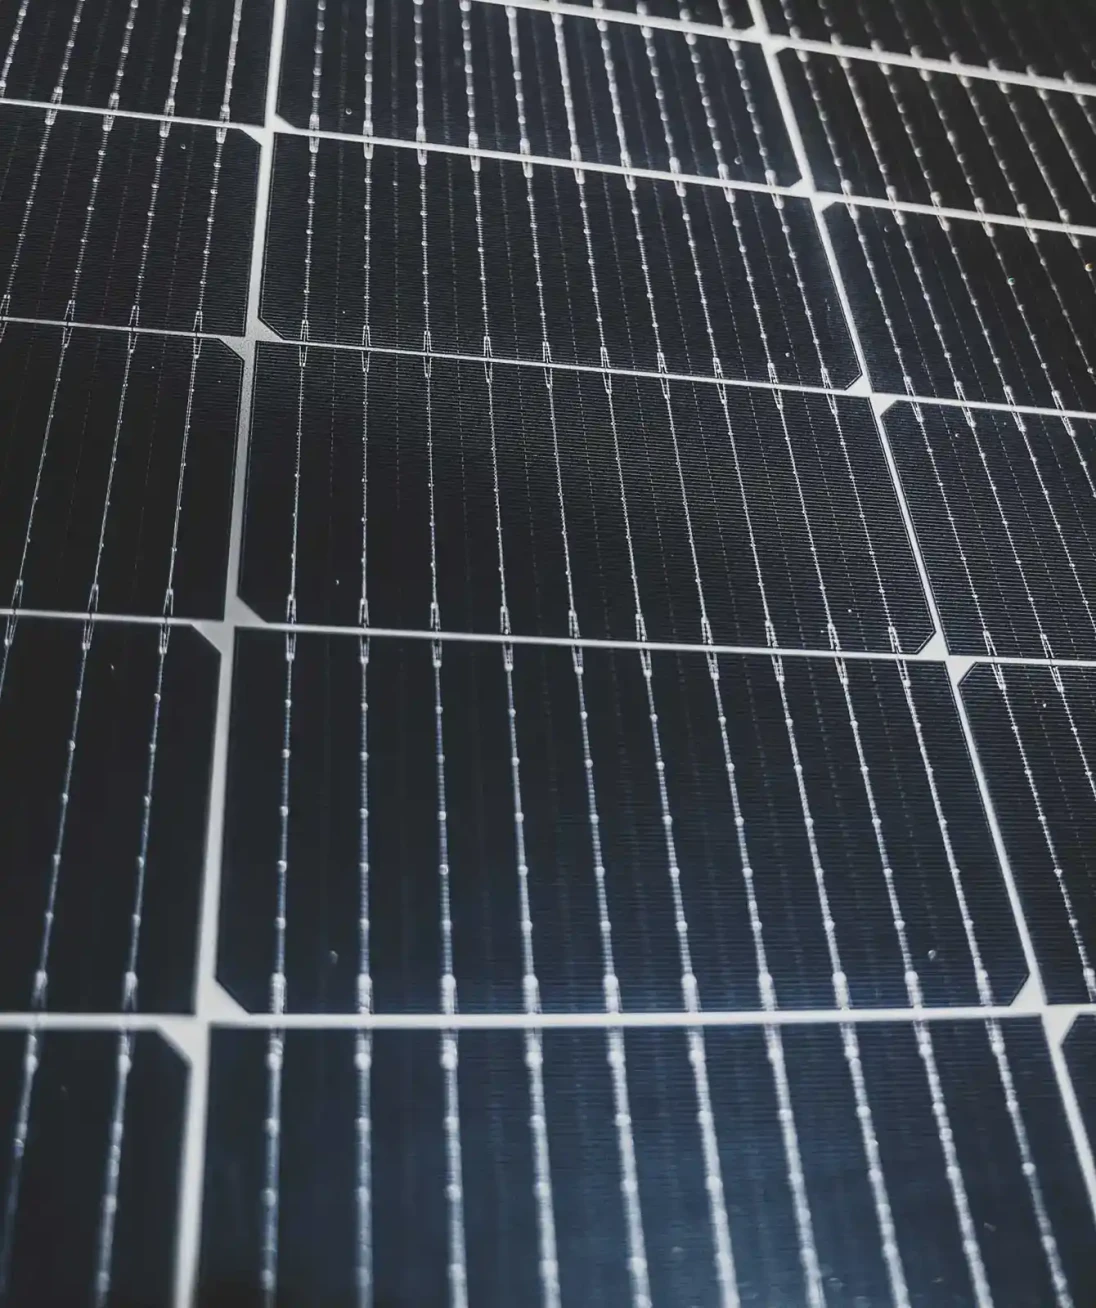 Solar panel cells